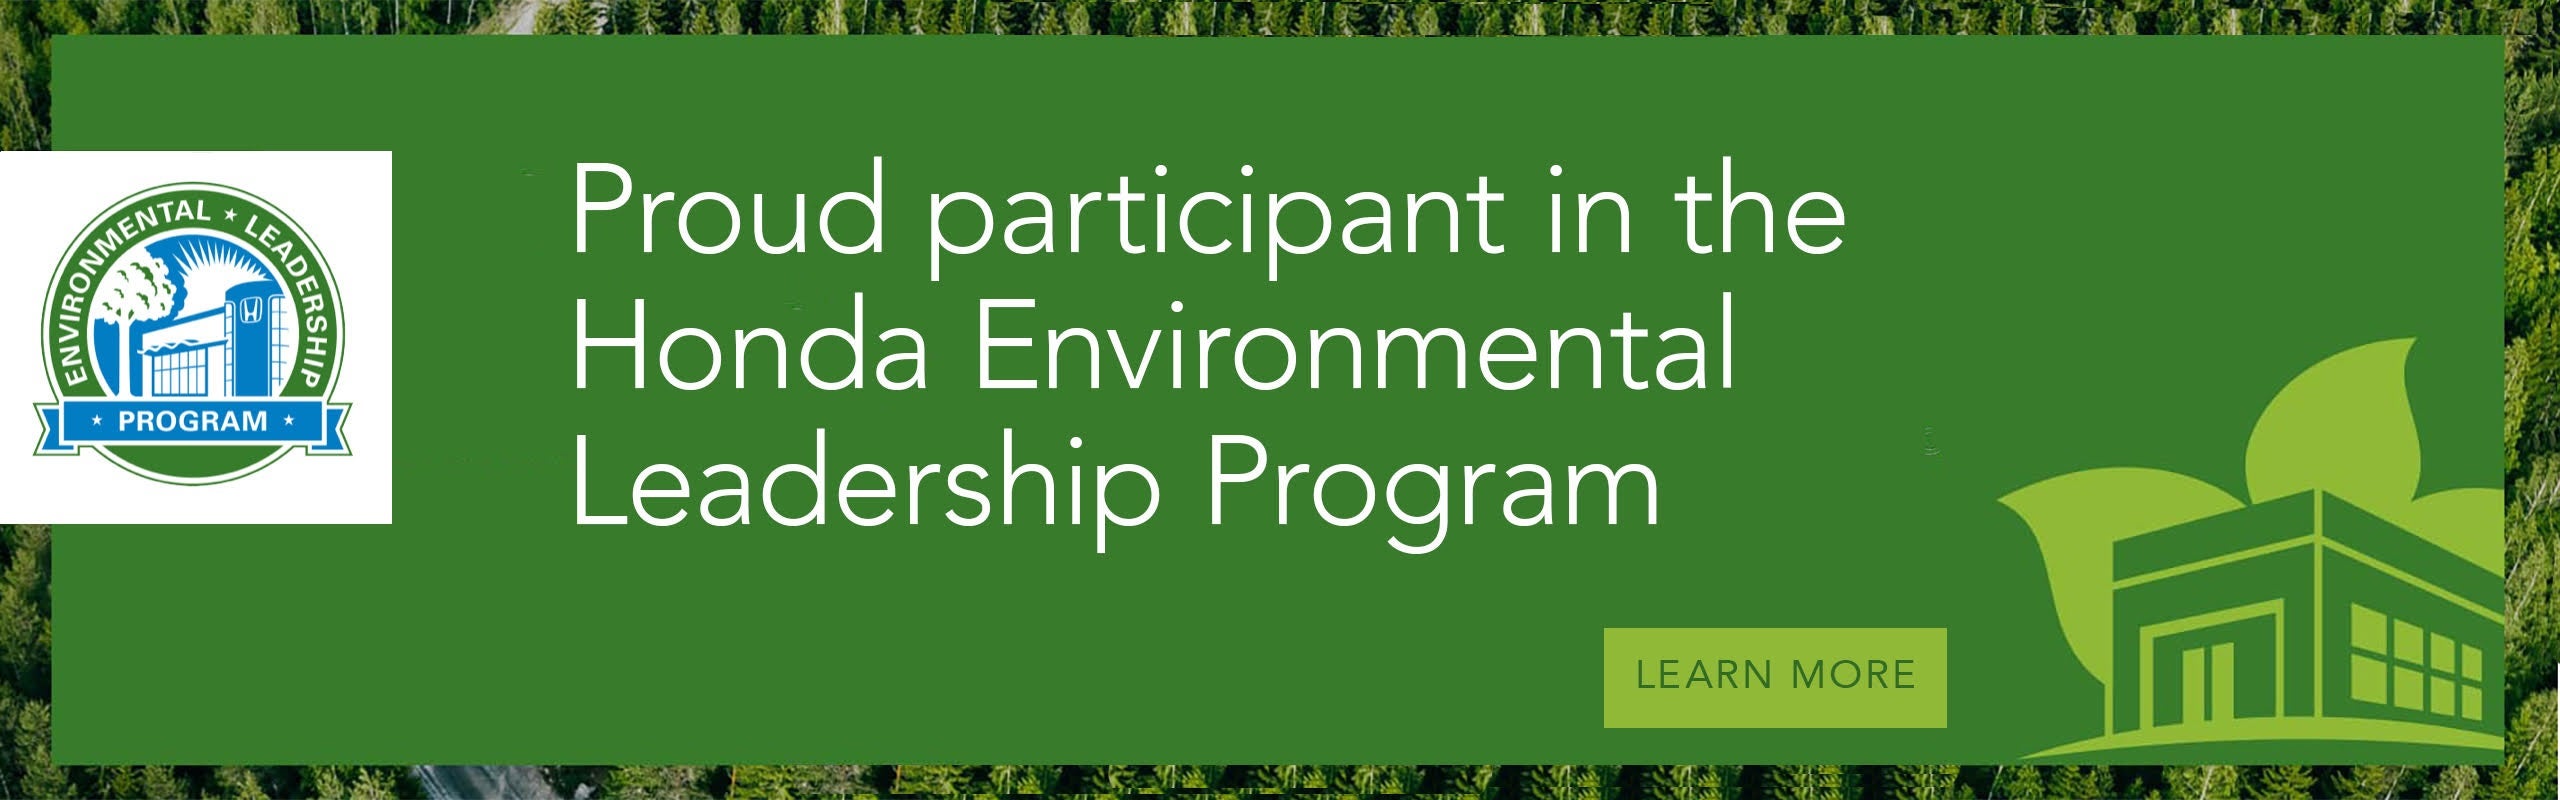 Honda Environmental Leadership Program